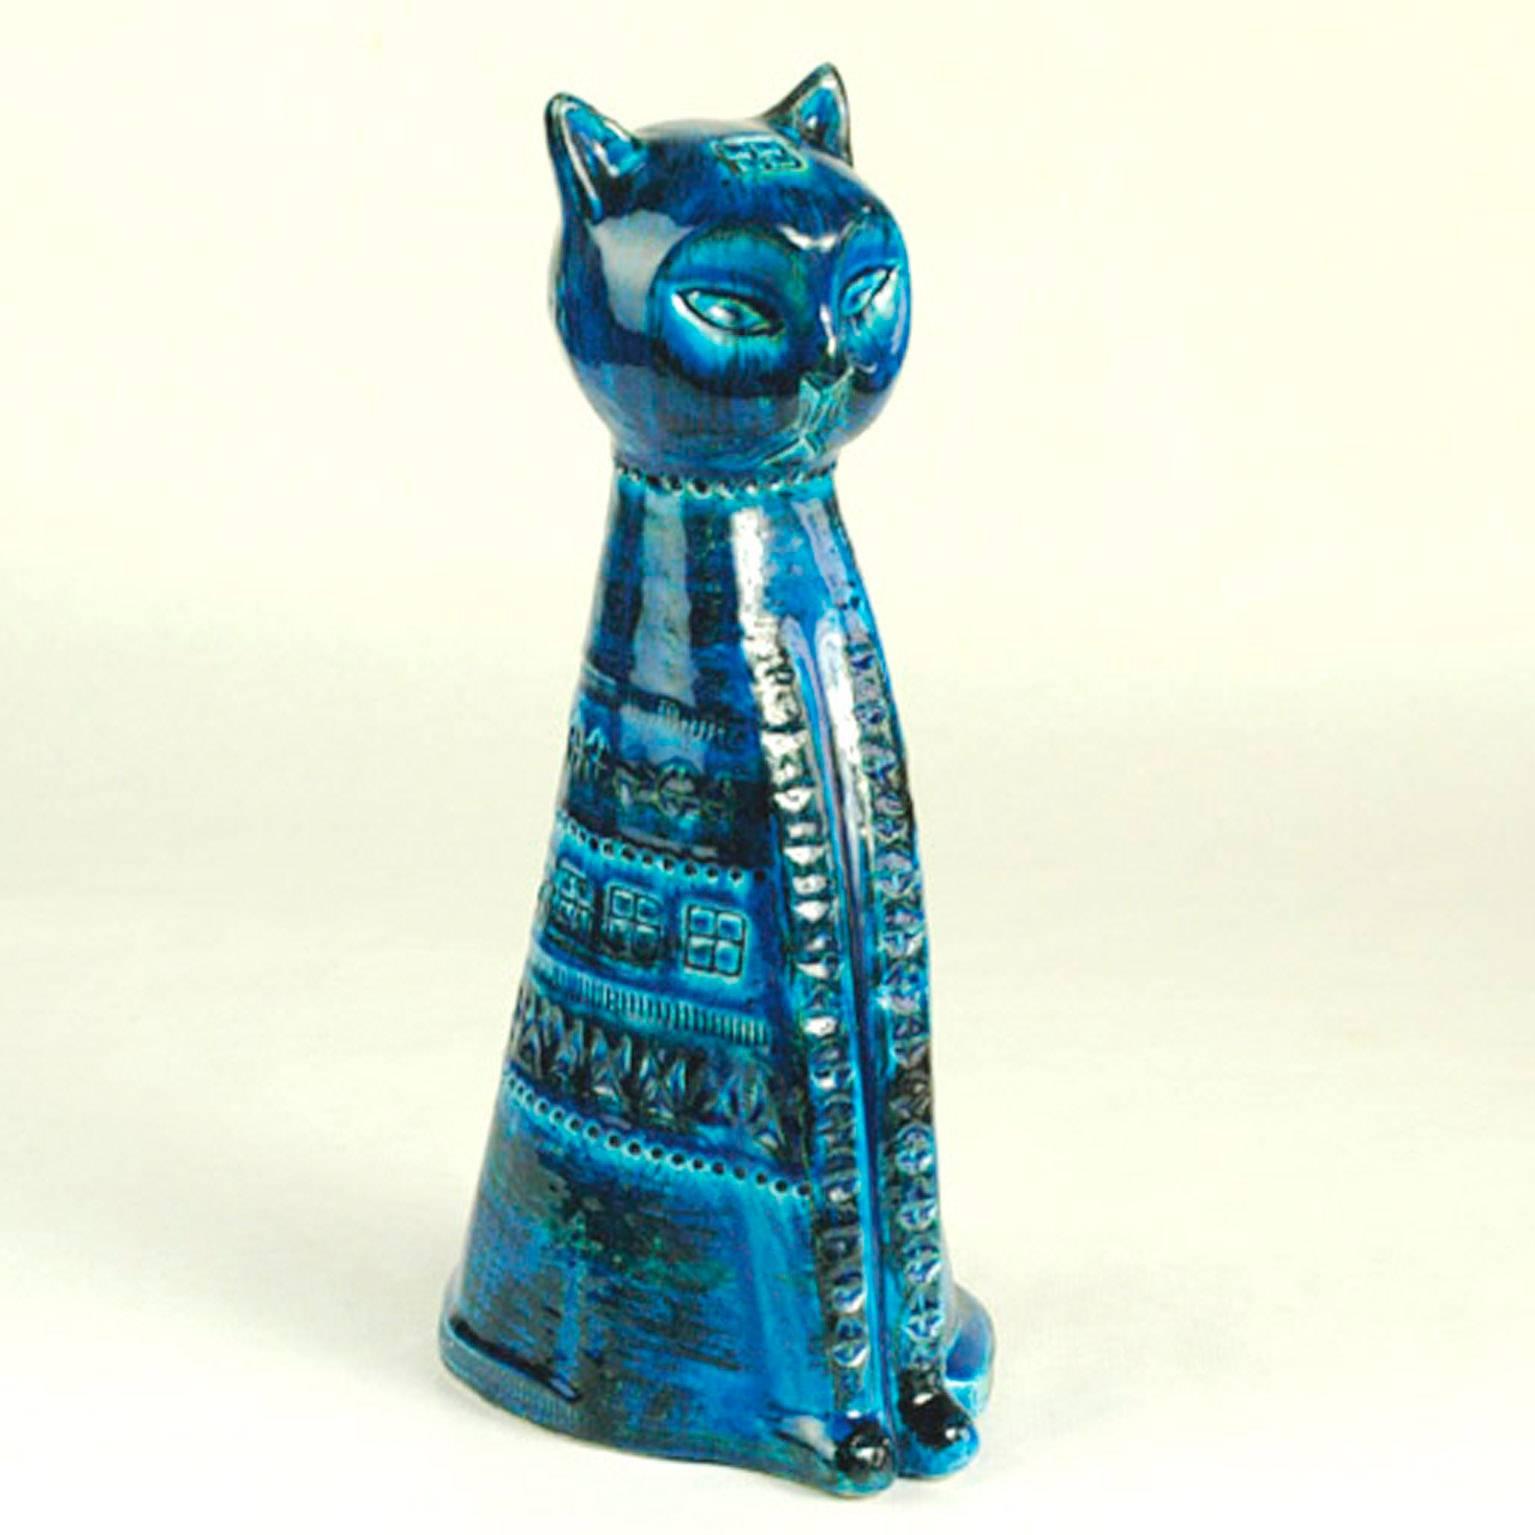 Huge Italian modern ceramic cat sculptures from the Rimini Blue series.